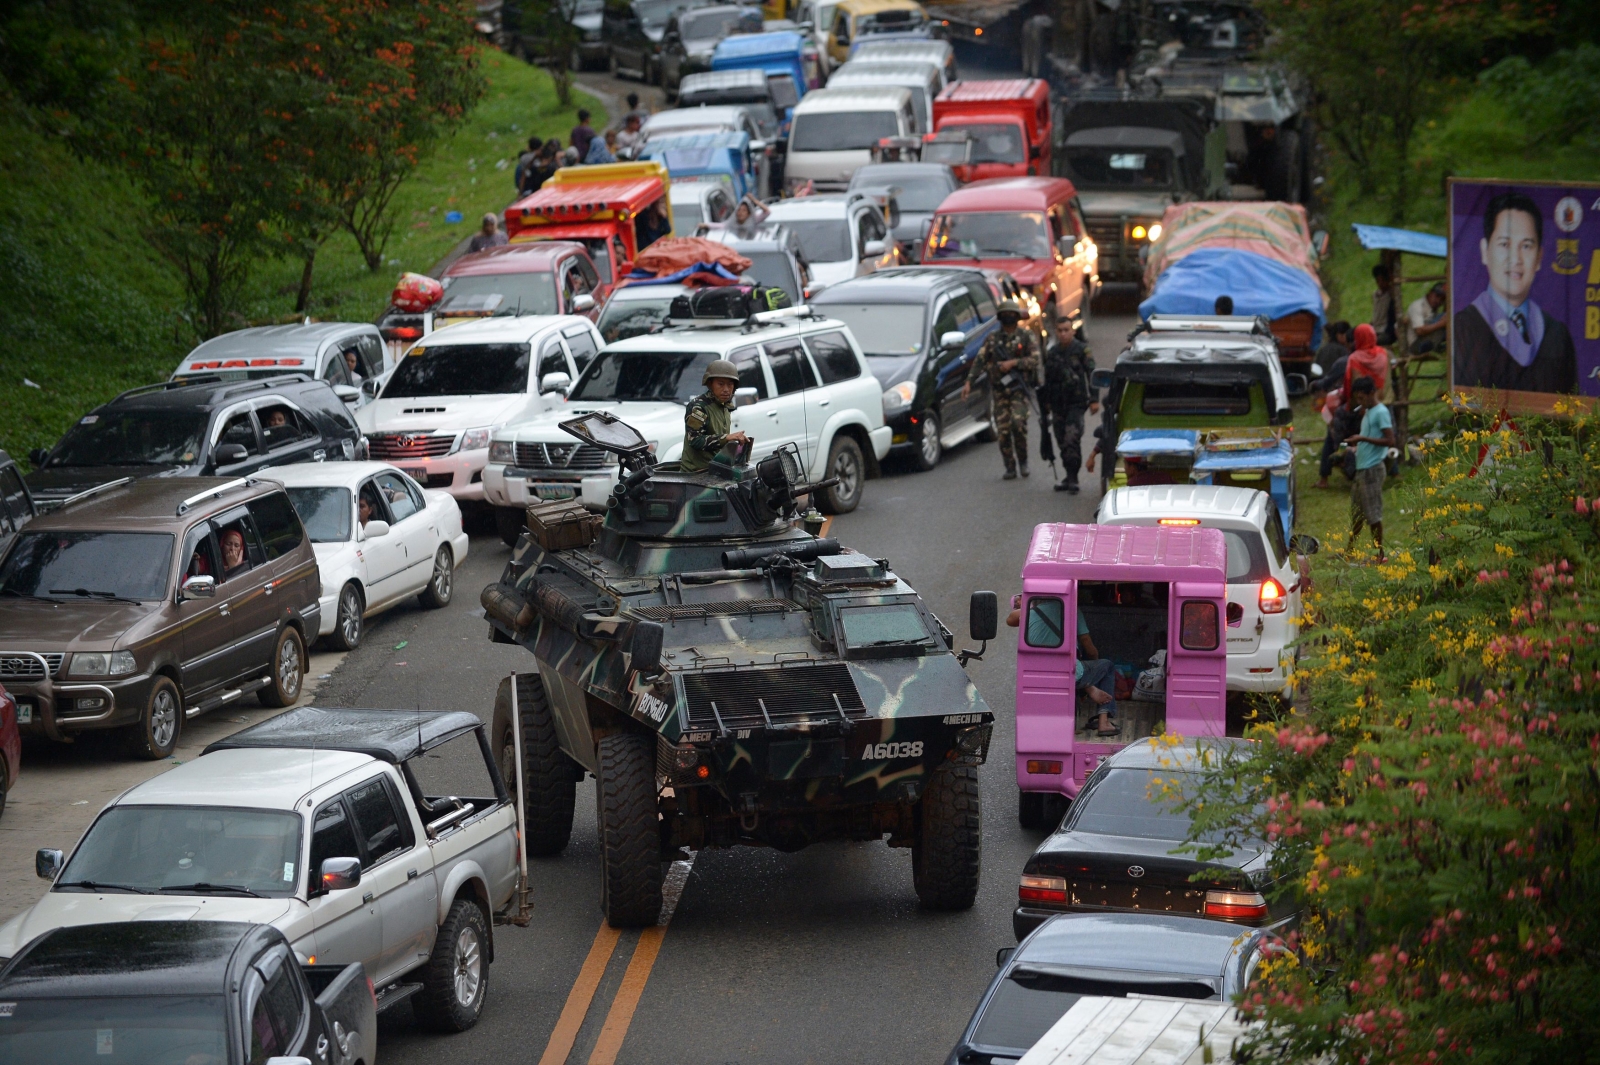 Philippines Marawi Isis Islamic State